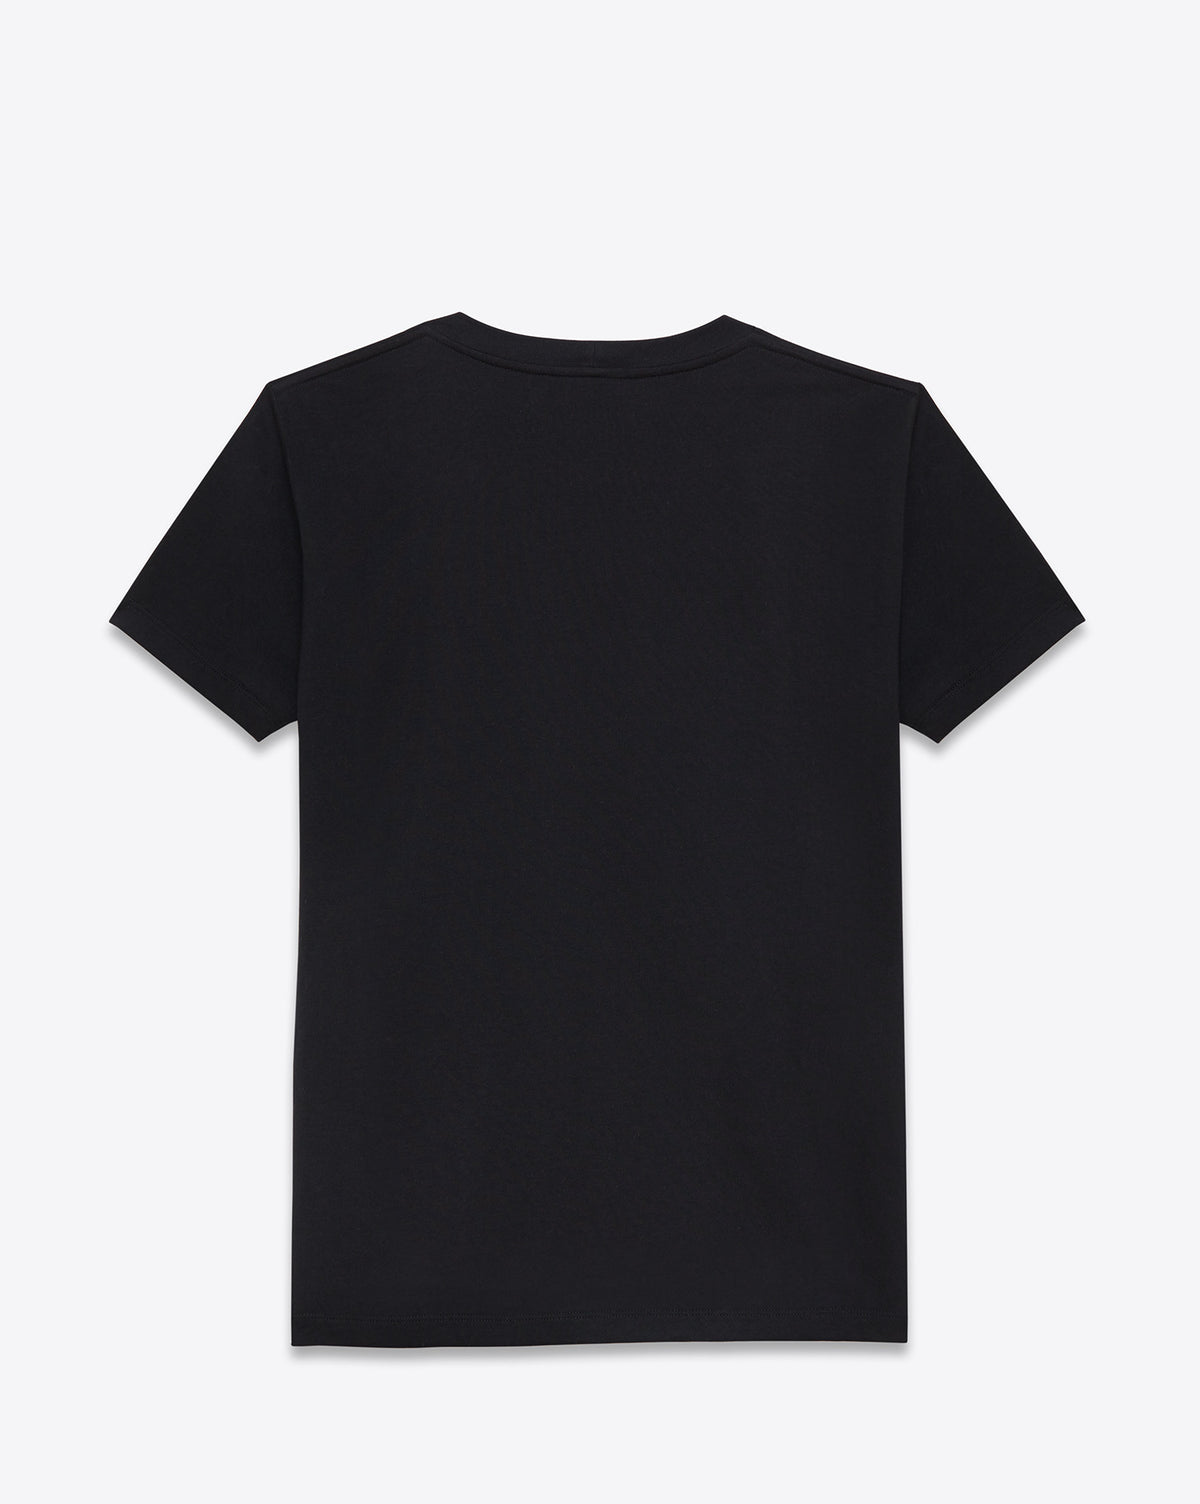 Wavy Baby T-Shirt Black - DEMEANOIR - 2